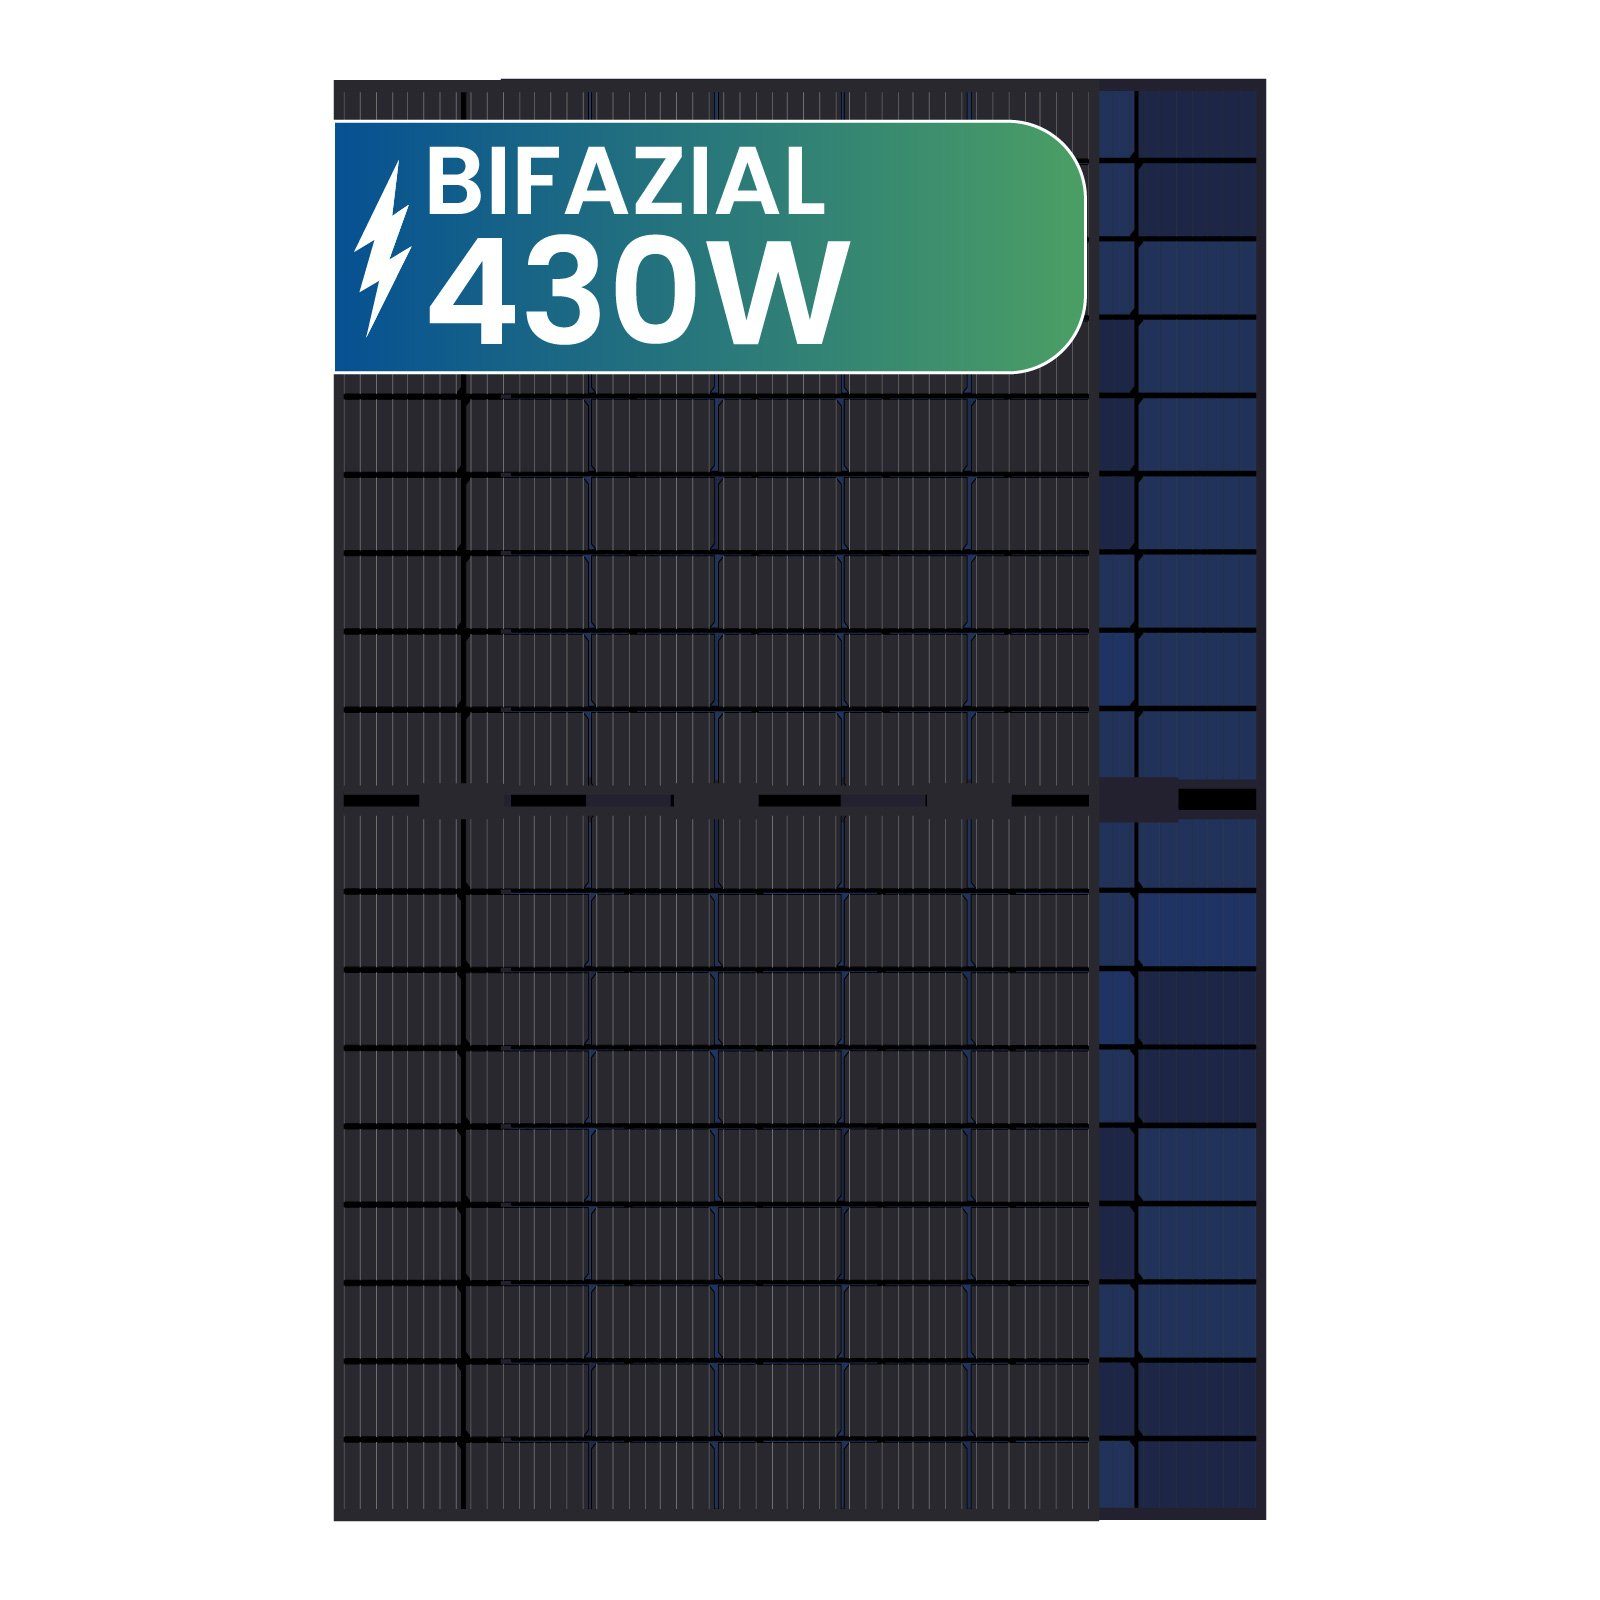 Campergold Solaranlage 2x 430 Watt Bifacial Photovoltaik monokristalline Schwarz Solarmodul, Sunpro 430W M10 N Type Mono Bifacial Schwarz Solarmodul, Wasserdichtigkeitsklasse IP68